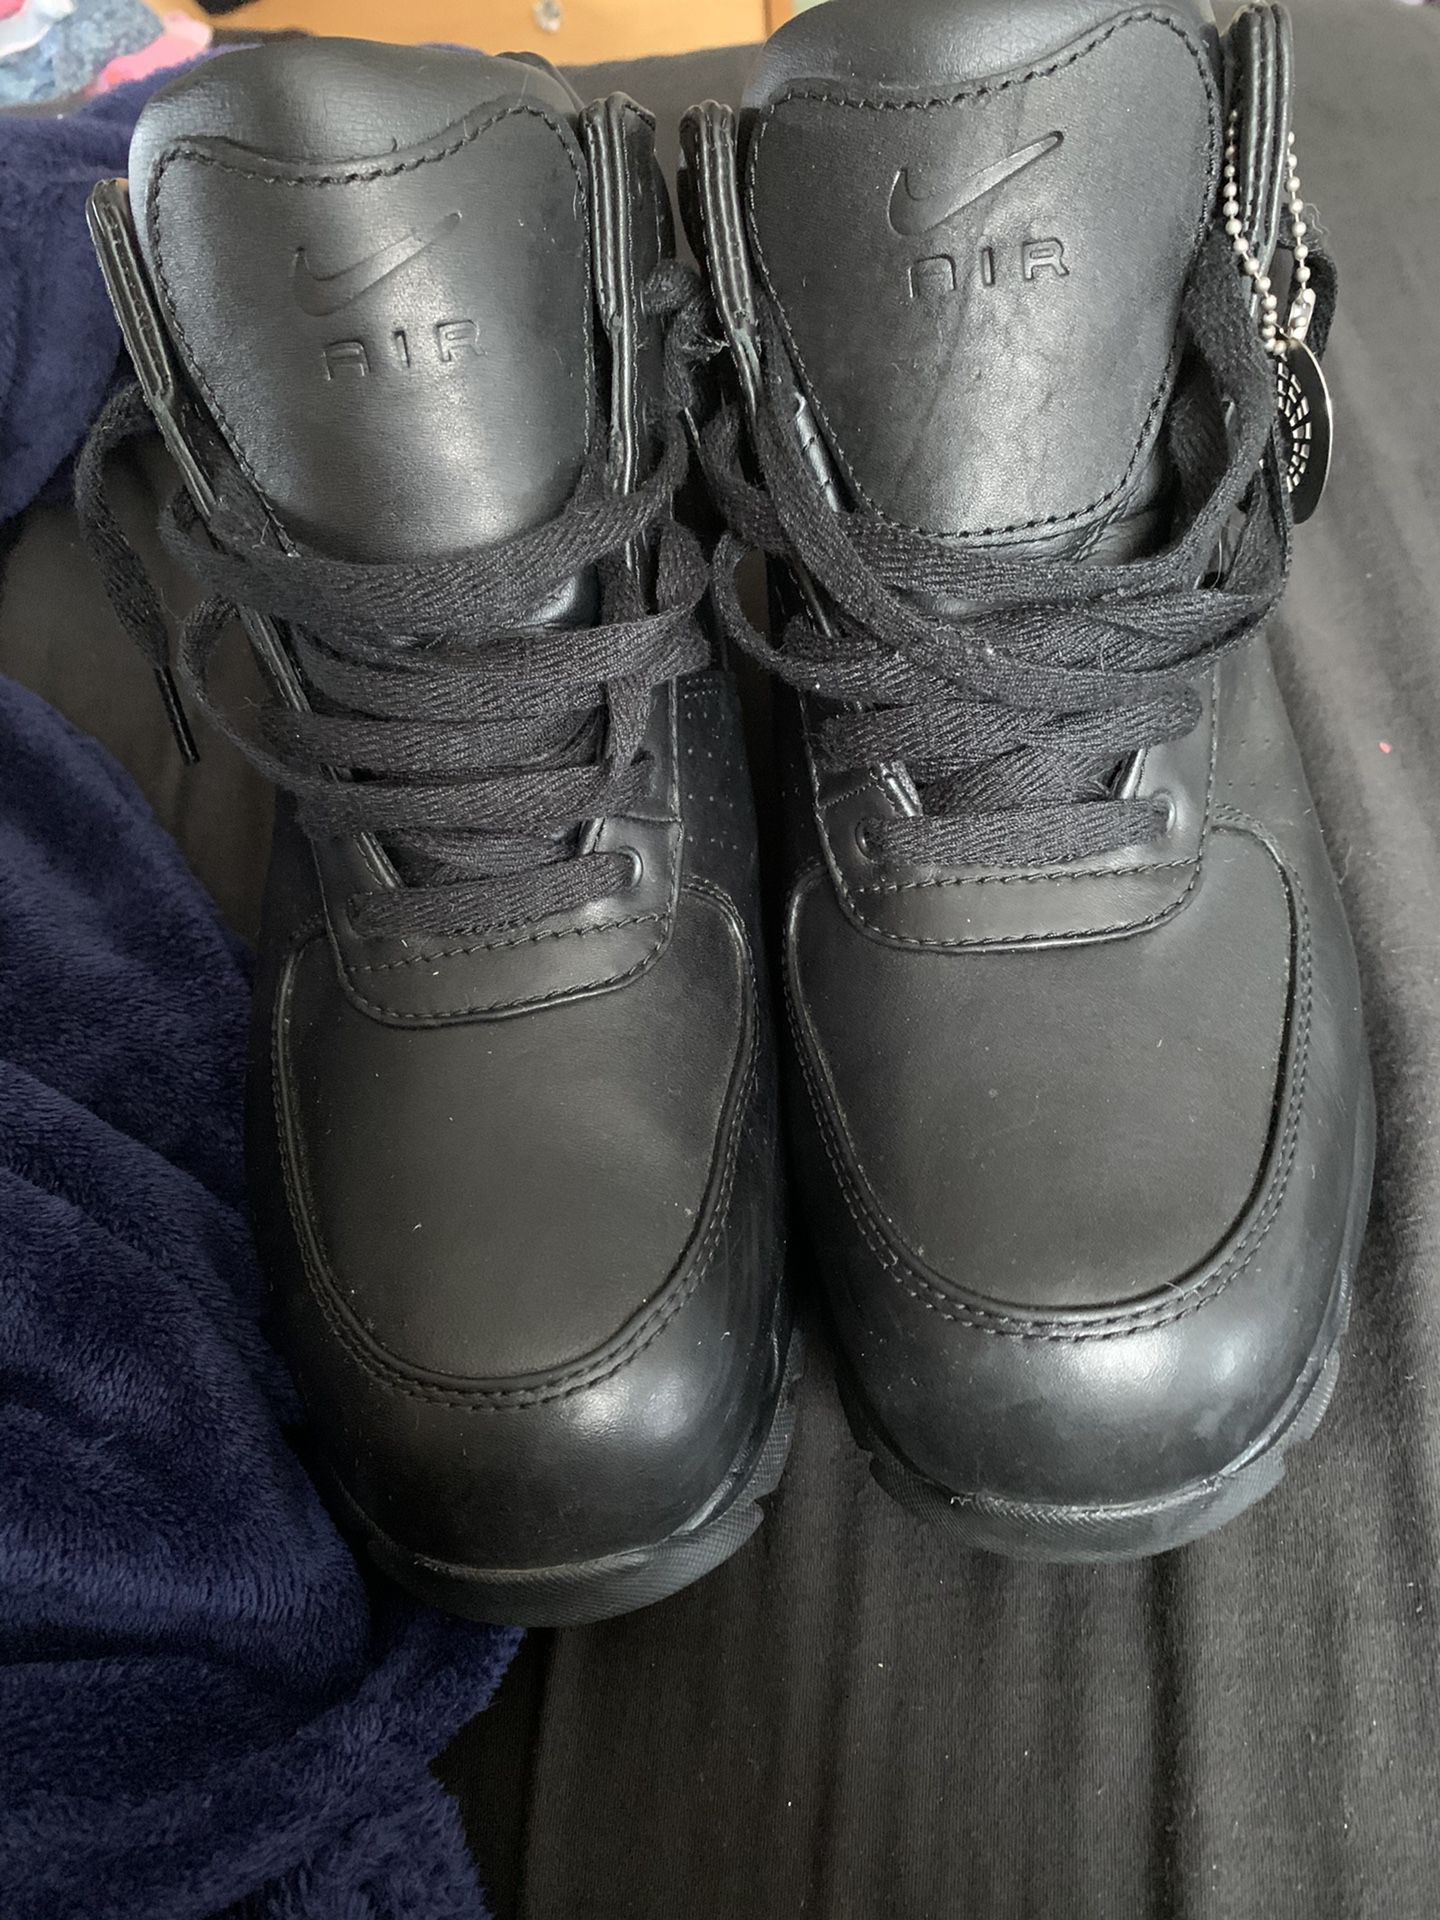 Black nike boots